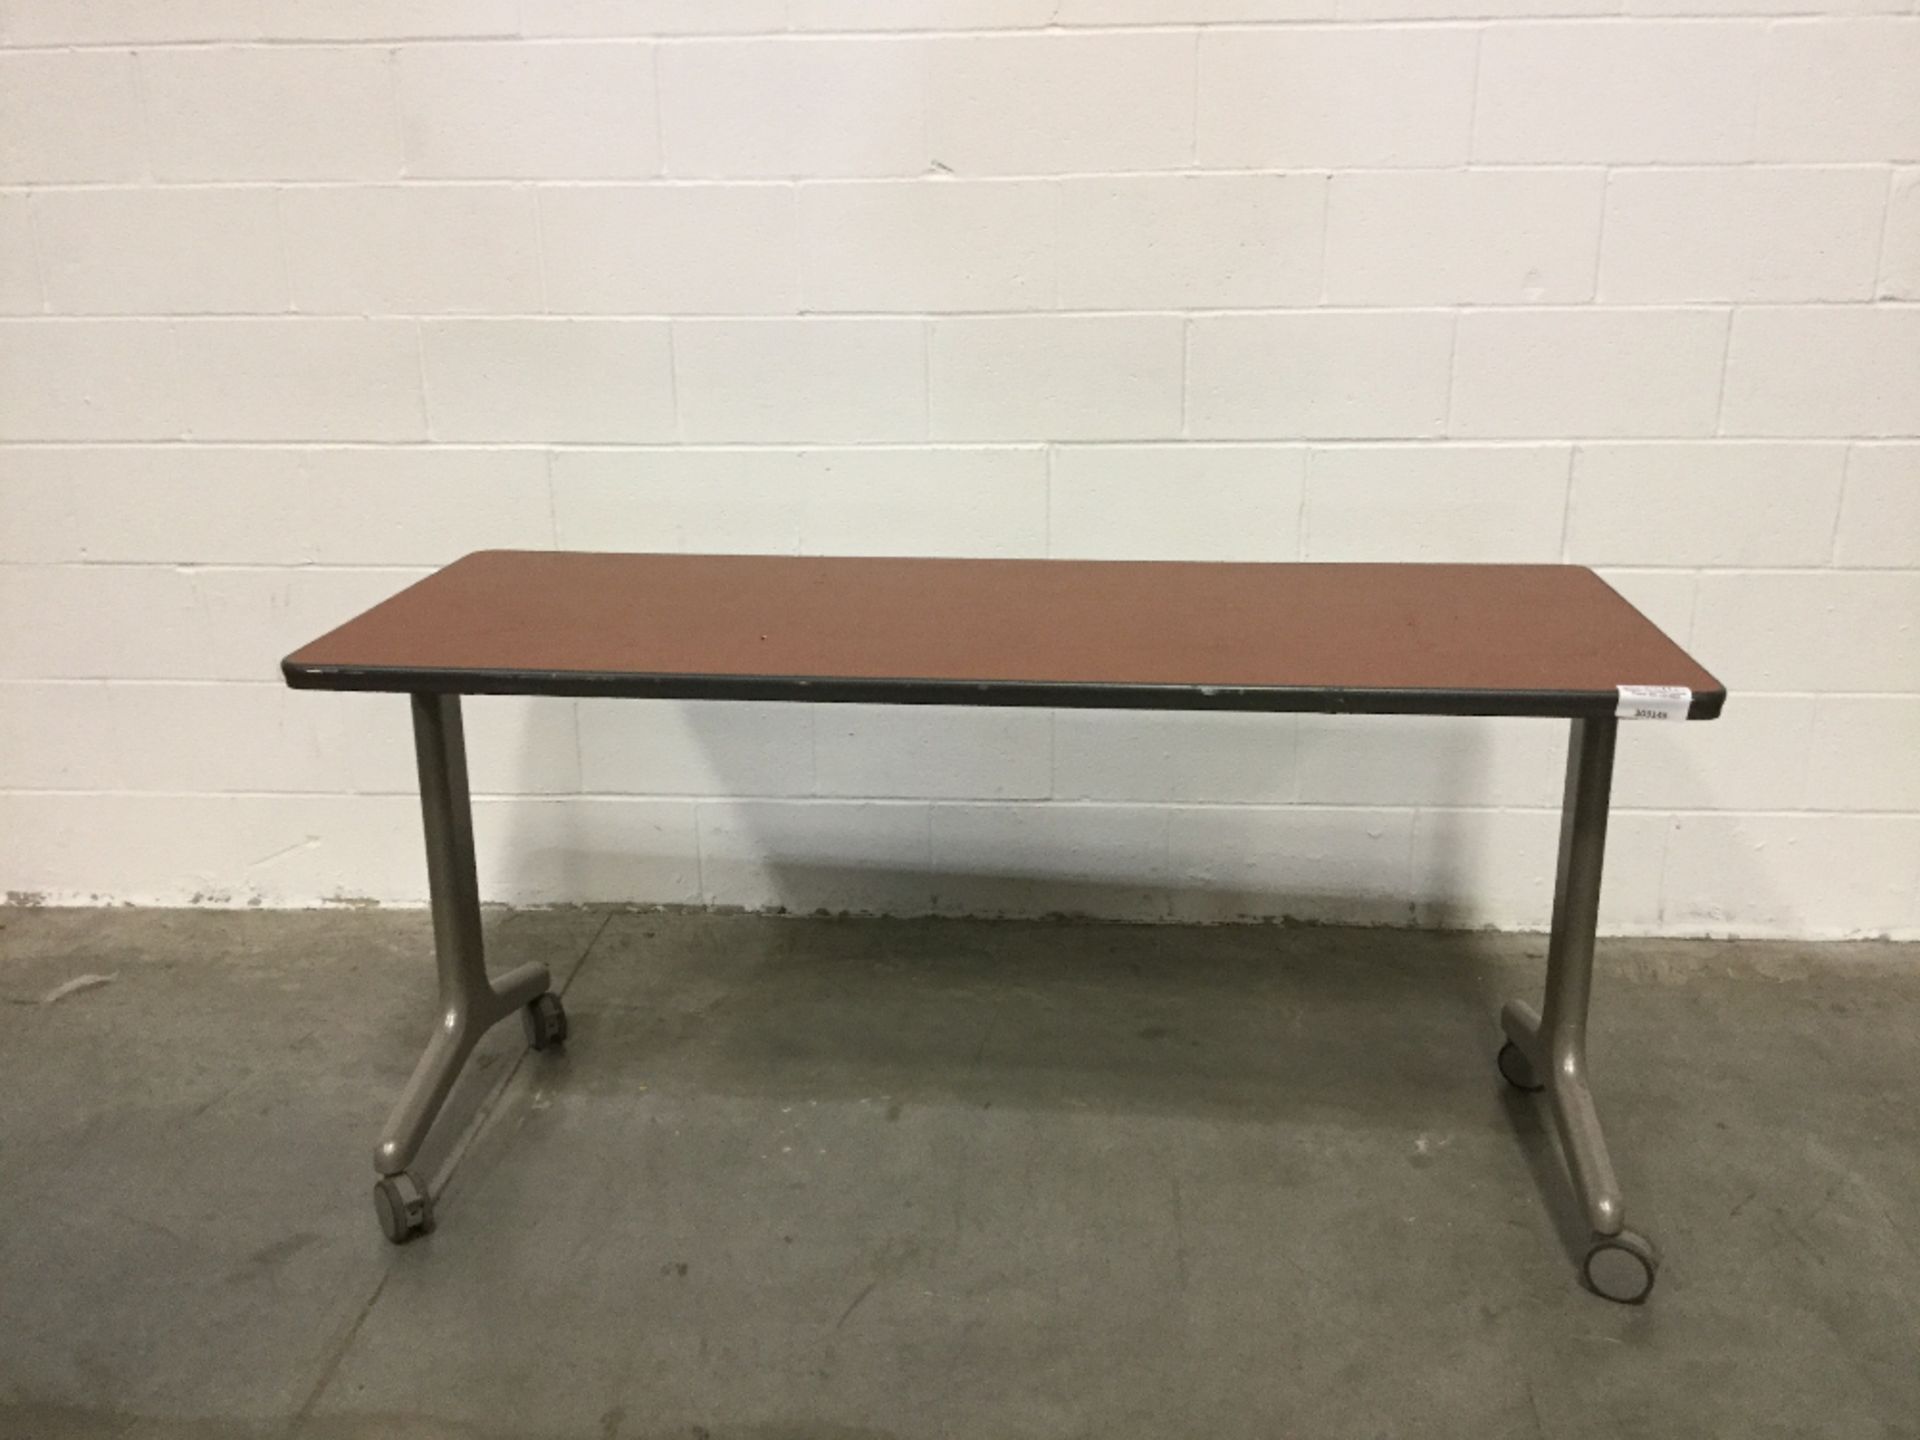 5' Portable Table